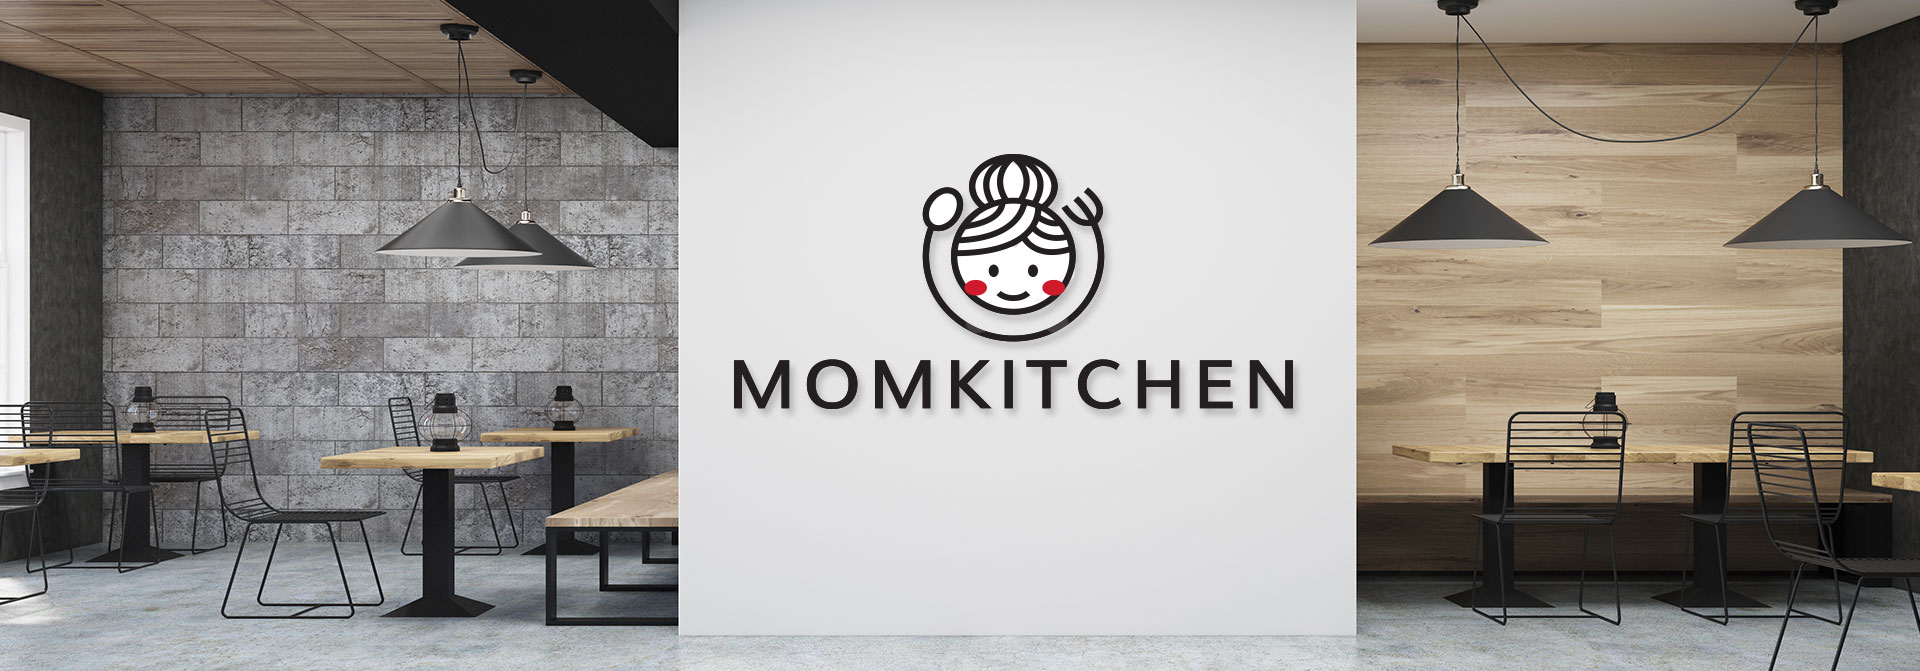 Momkitchen restaurant design for design ideas and inspiration